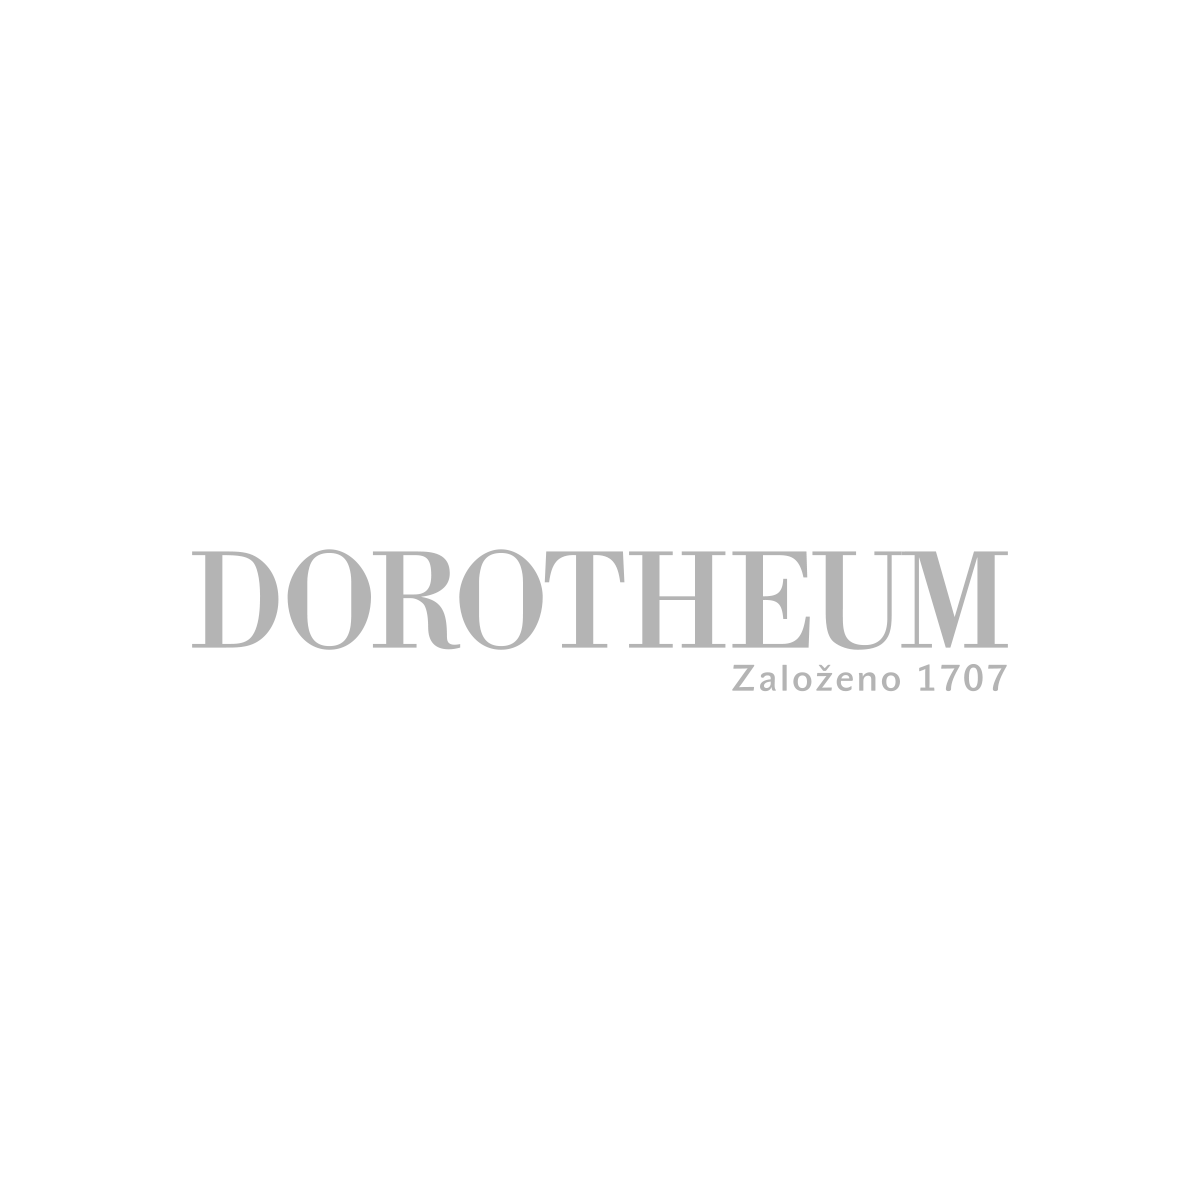 [klienti/Dorotheum.png]